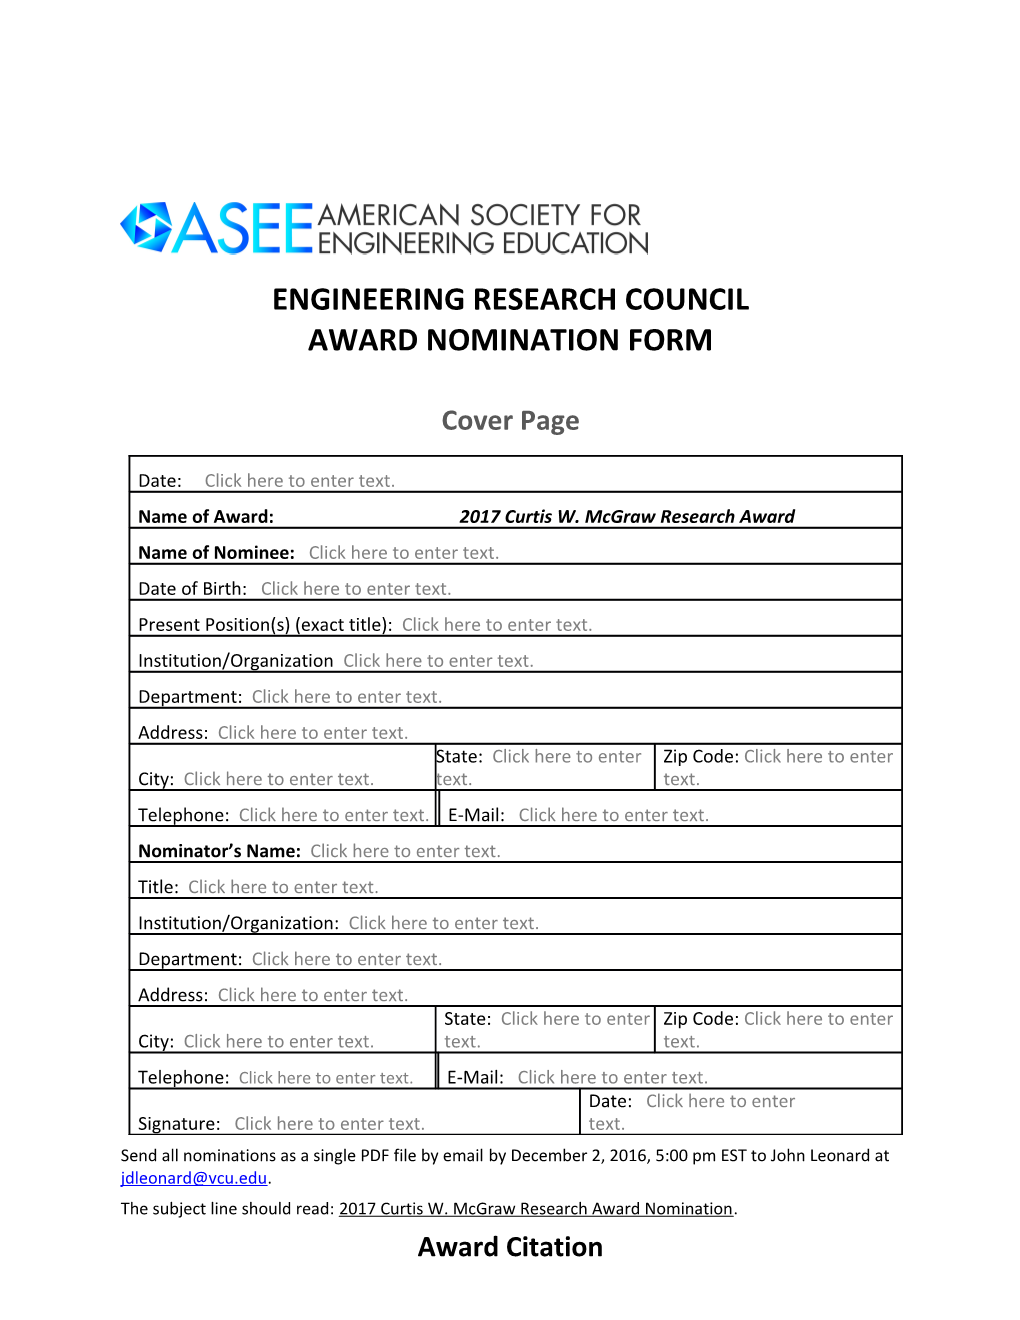 ASEE Awards Nomination Form